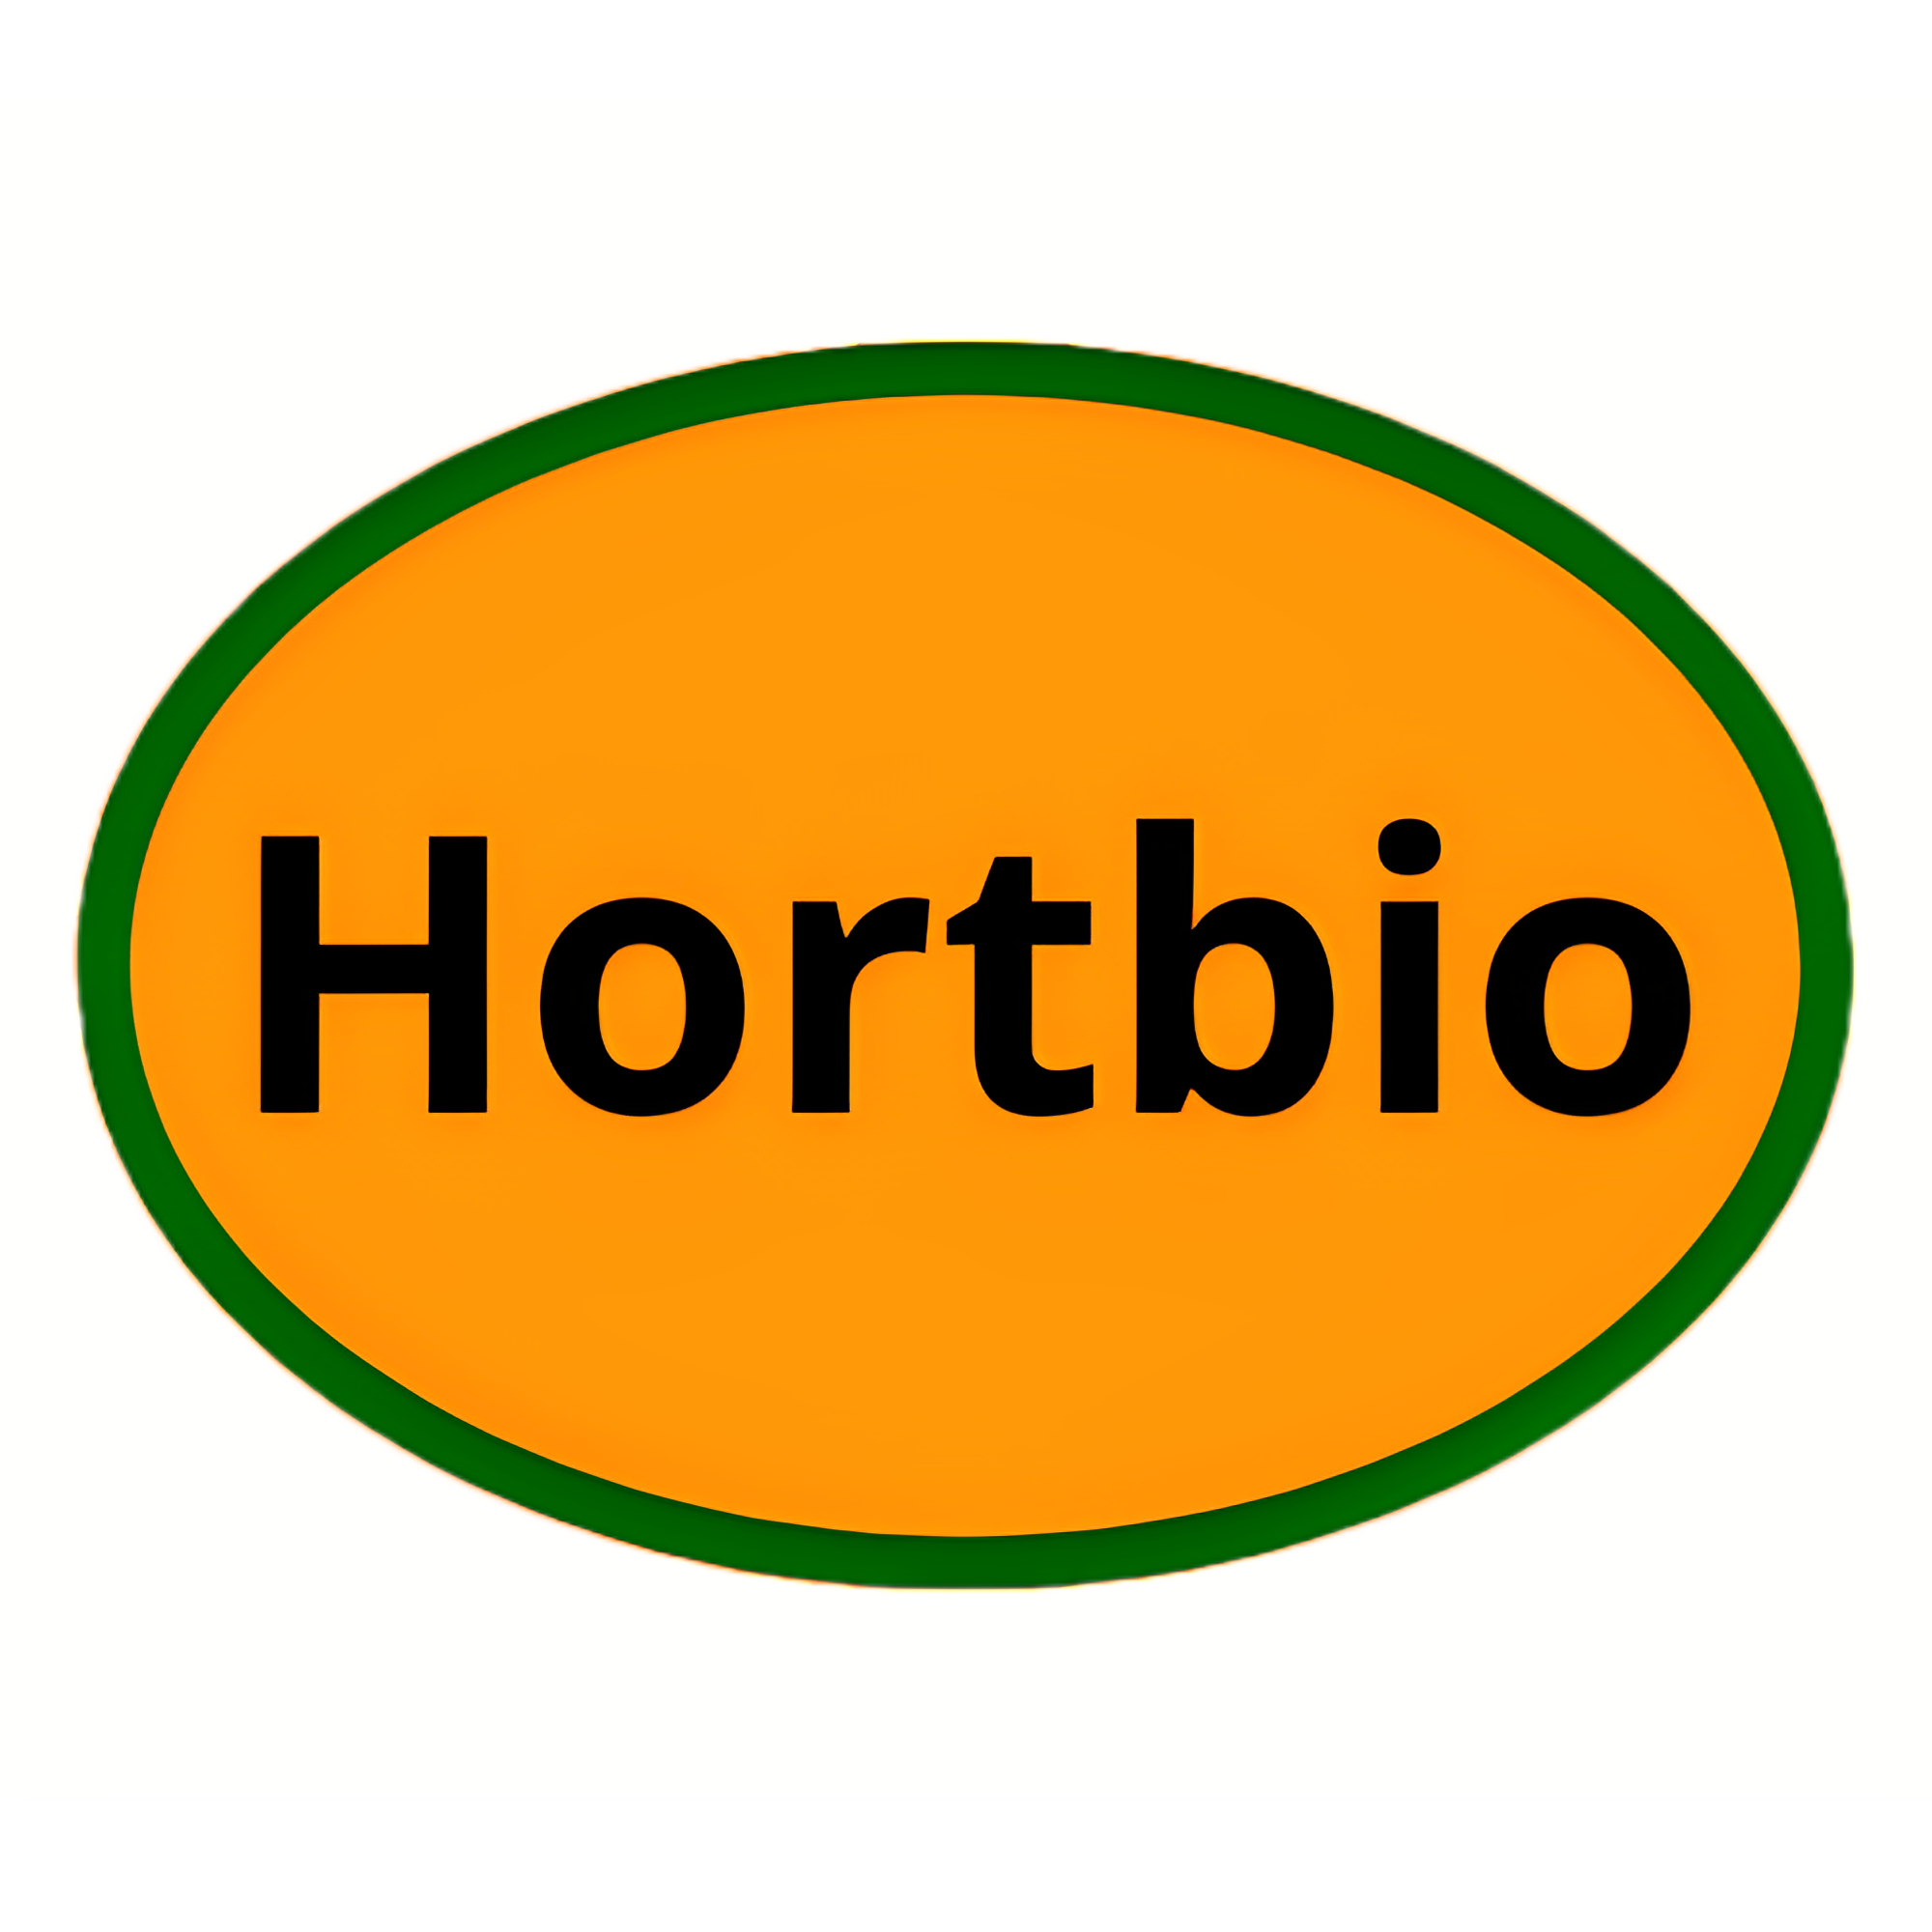 Hortbio Market